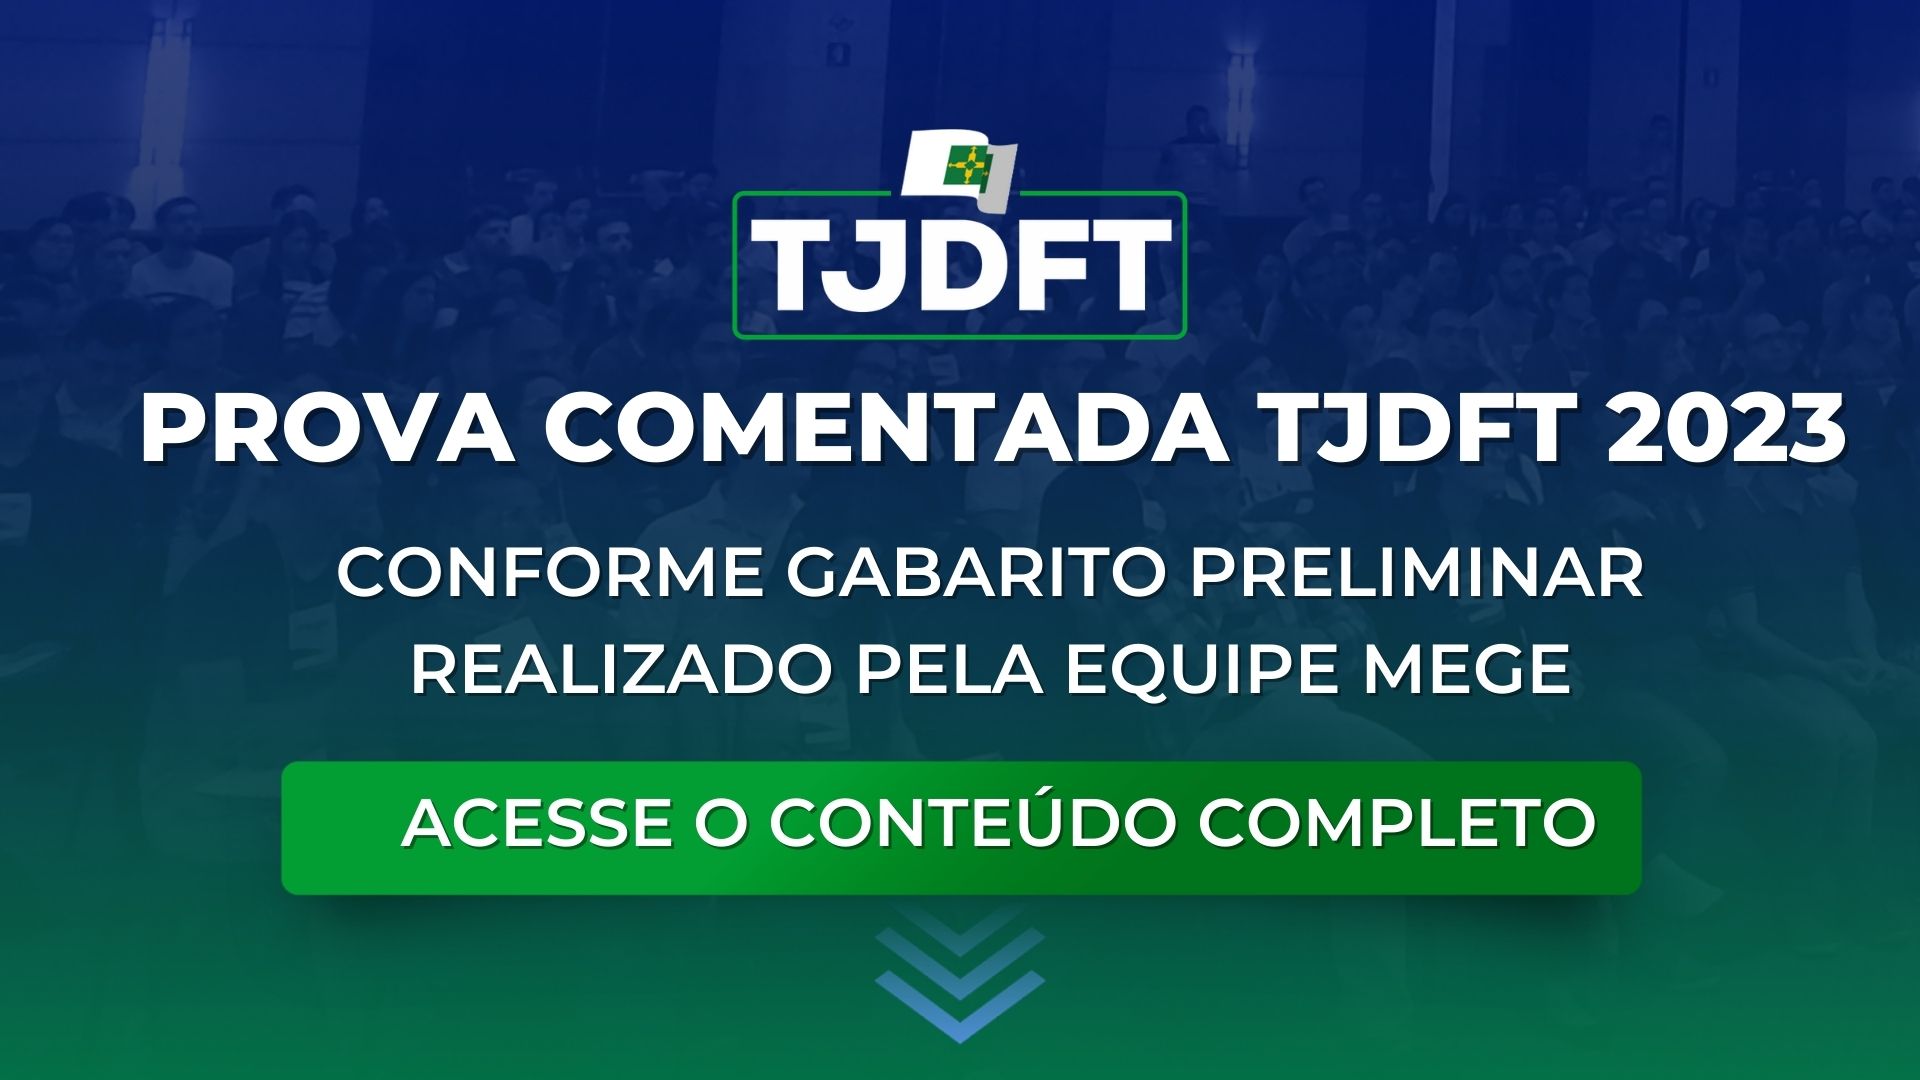 TJDFT 2023: Prova comentada pela Equipe MEGE conforme gabarito preliminar